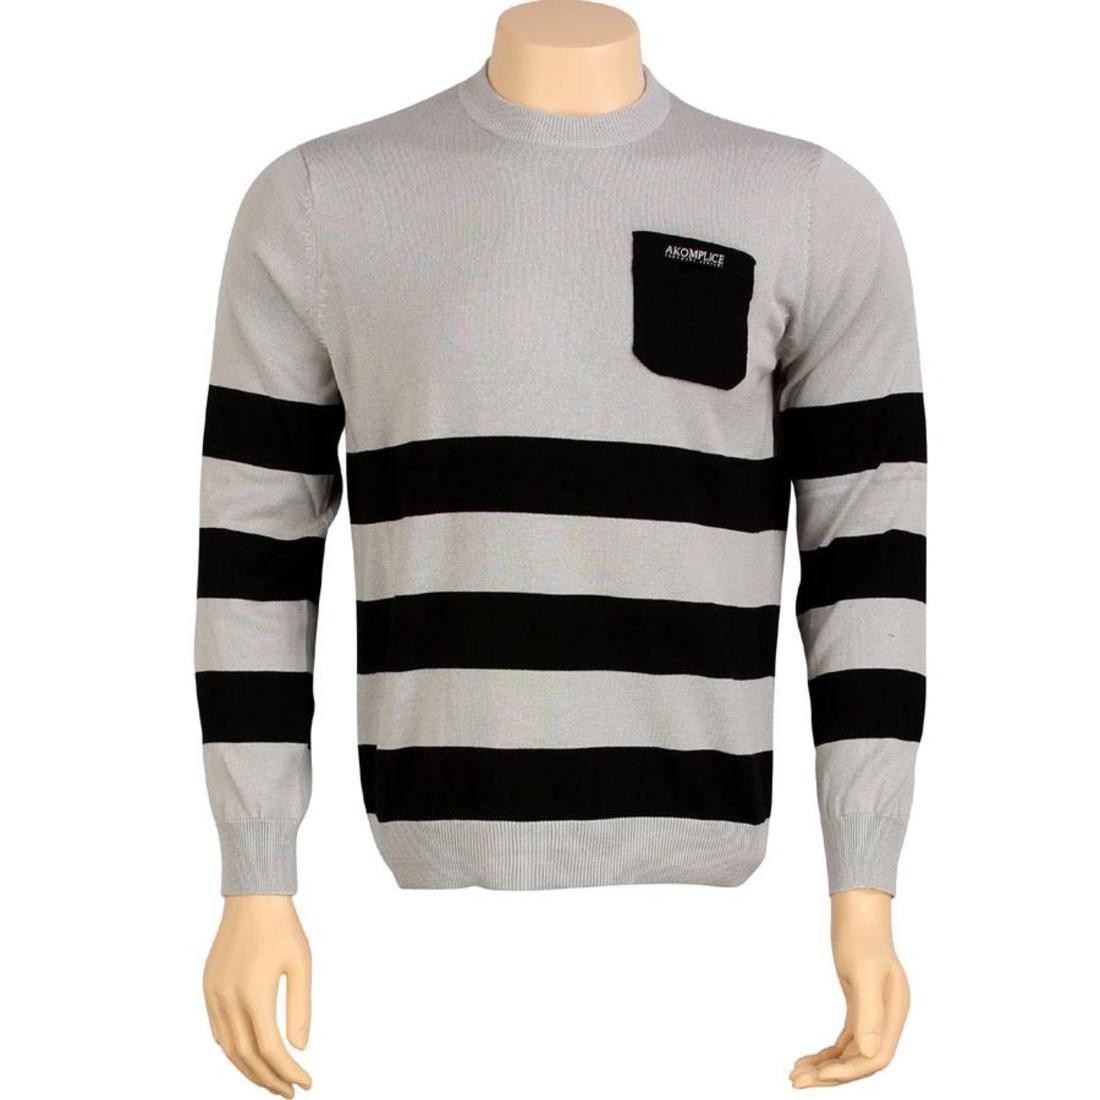 Akomplice VSOP Jumper Sweater (grey / black)